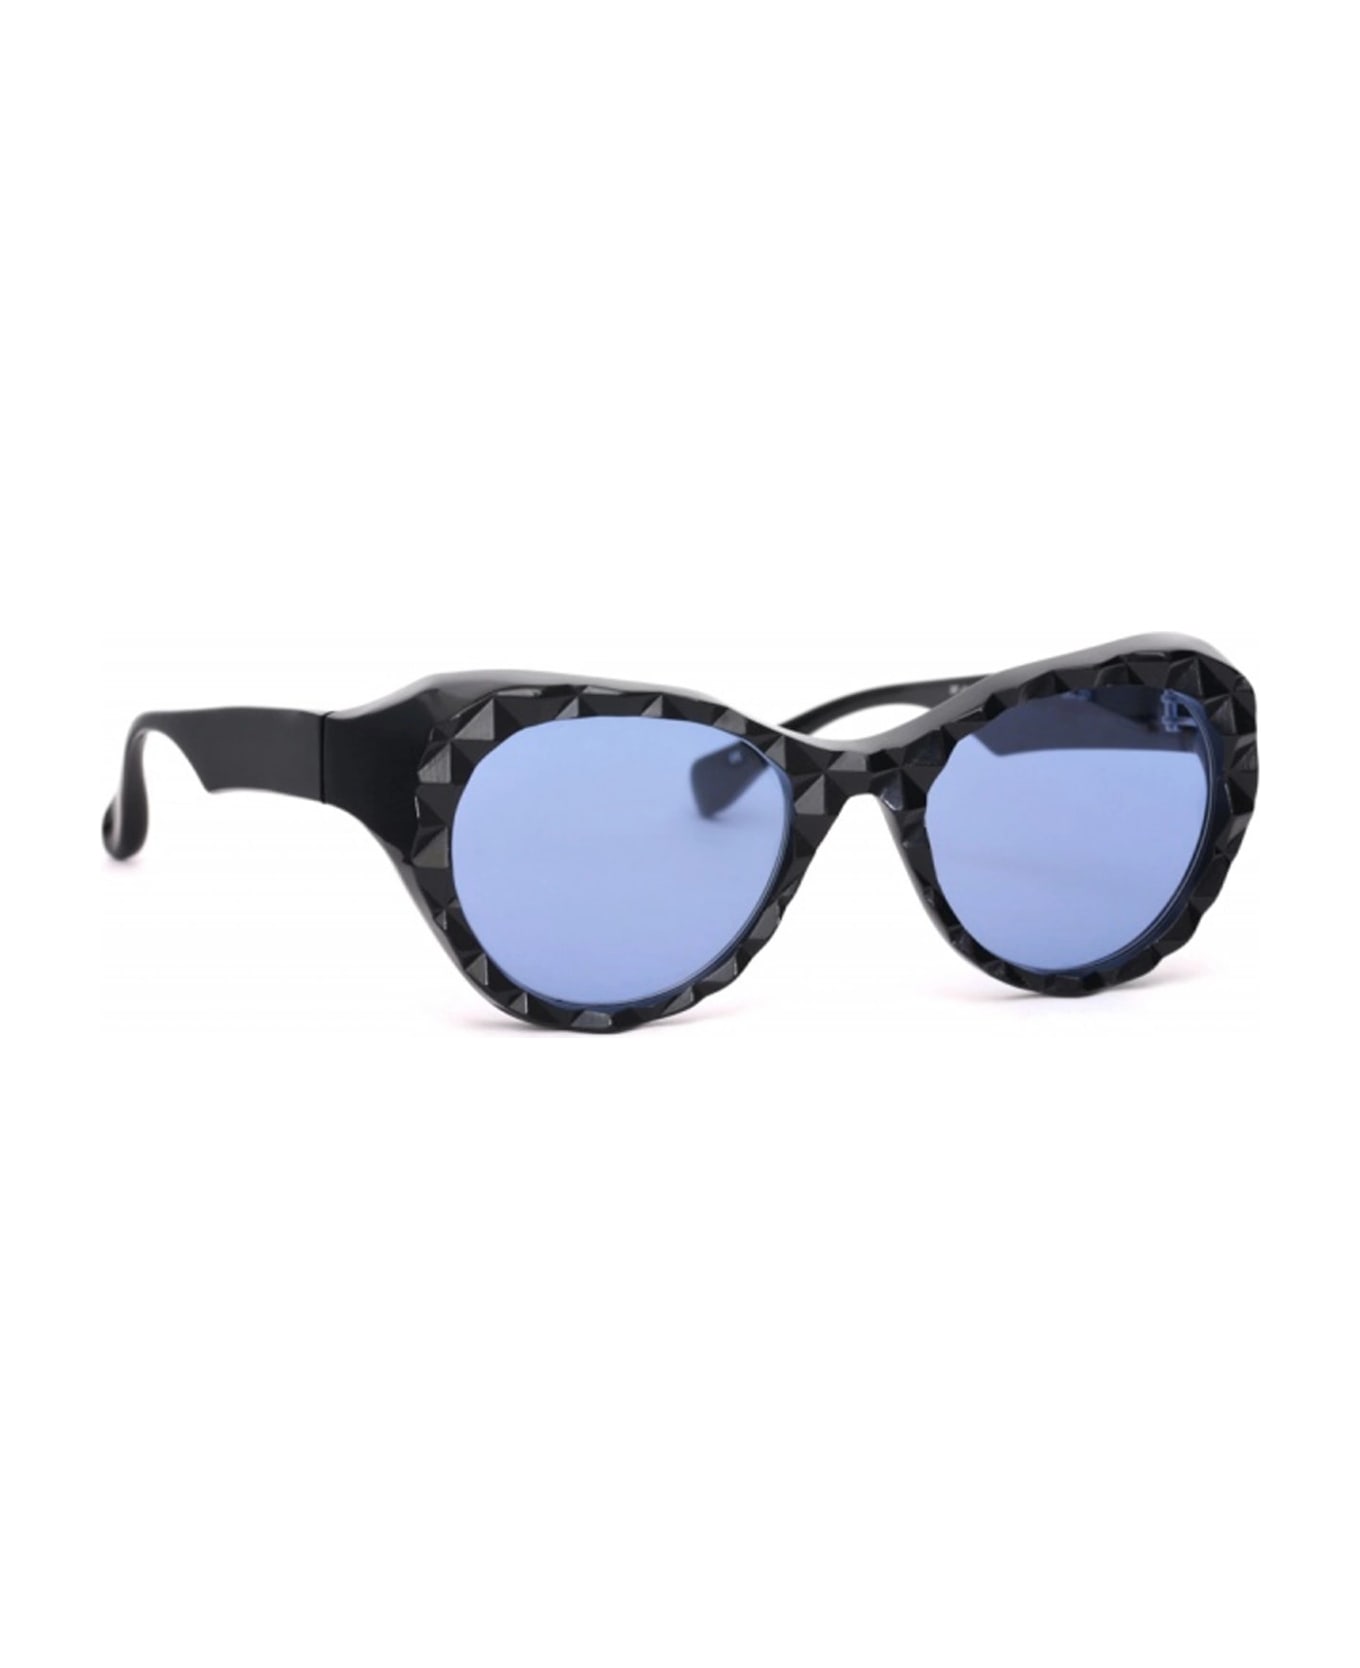 FACTORY900 Rf-063 - Black Sunglasses - Black